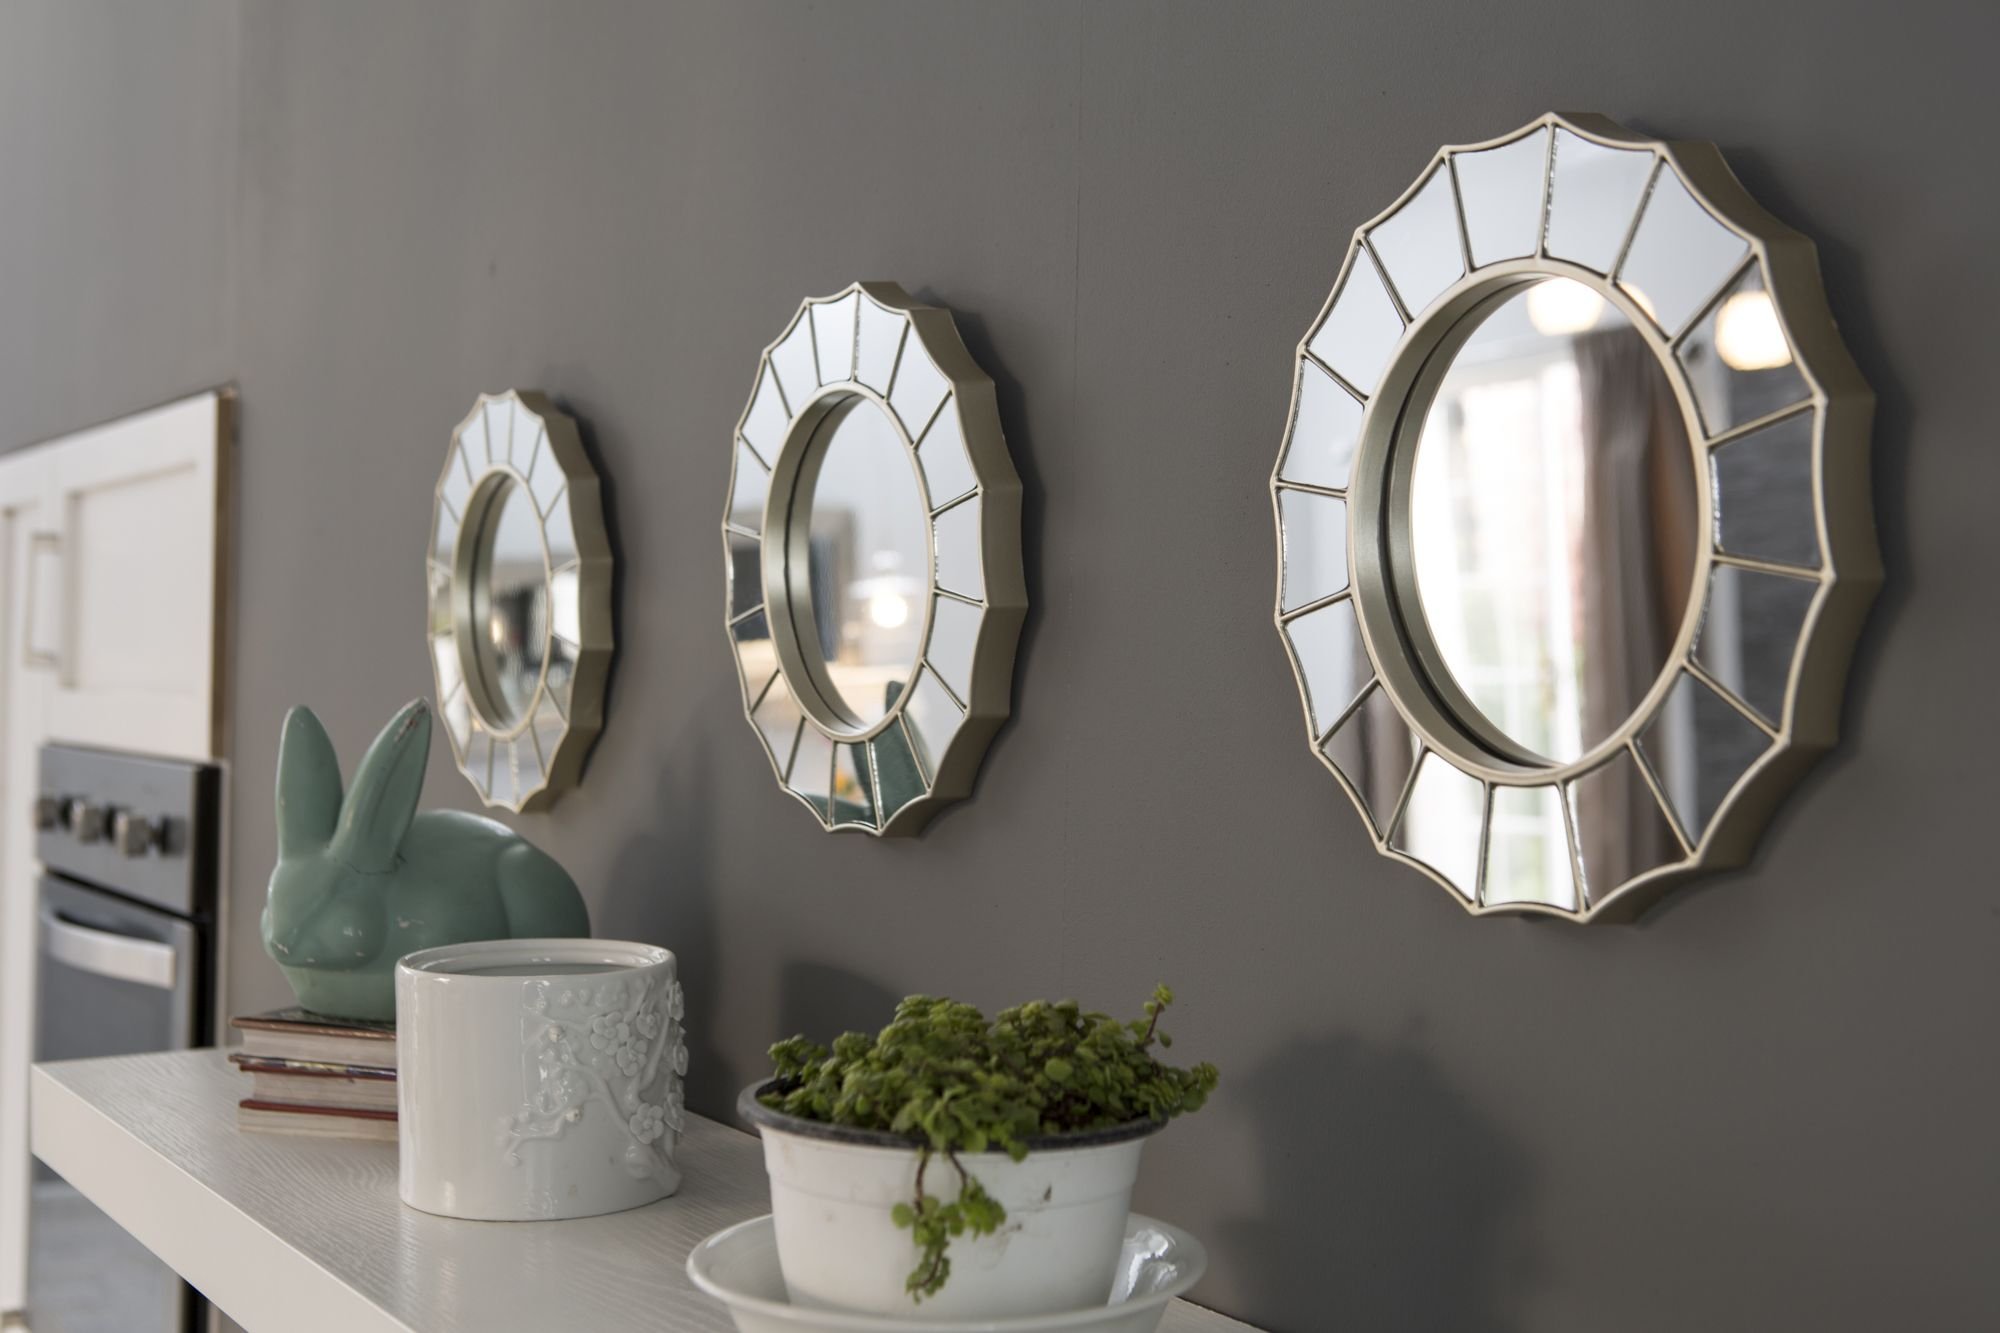 Mirror 3. QWERTY комплект декоративных зеркал "Булонь", бронза, 3шт, d12 см /16. Декоративные зеркала enzohome 2020. Набор декоративных зеркал. Набор из зеркал на стену.